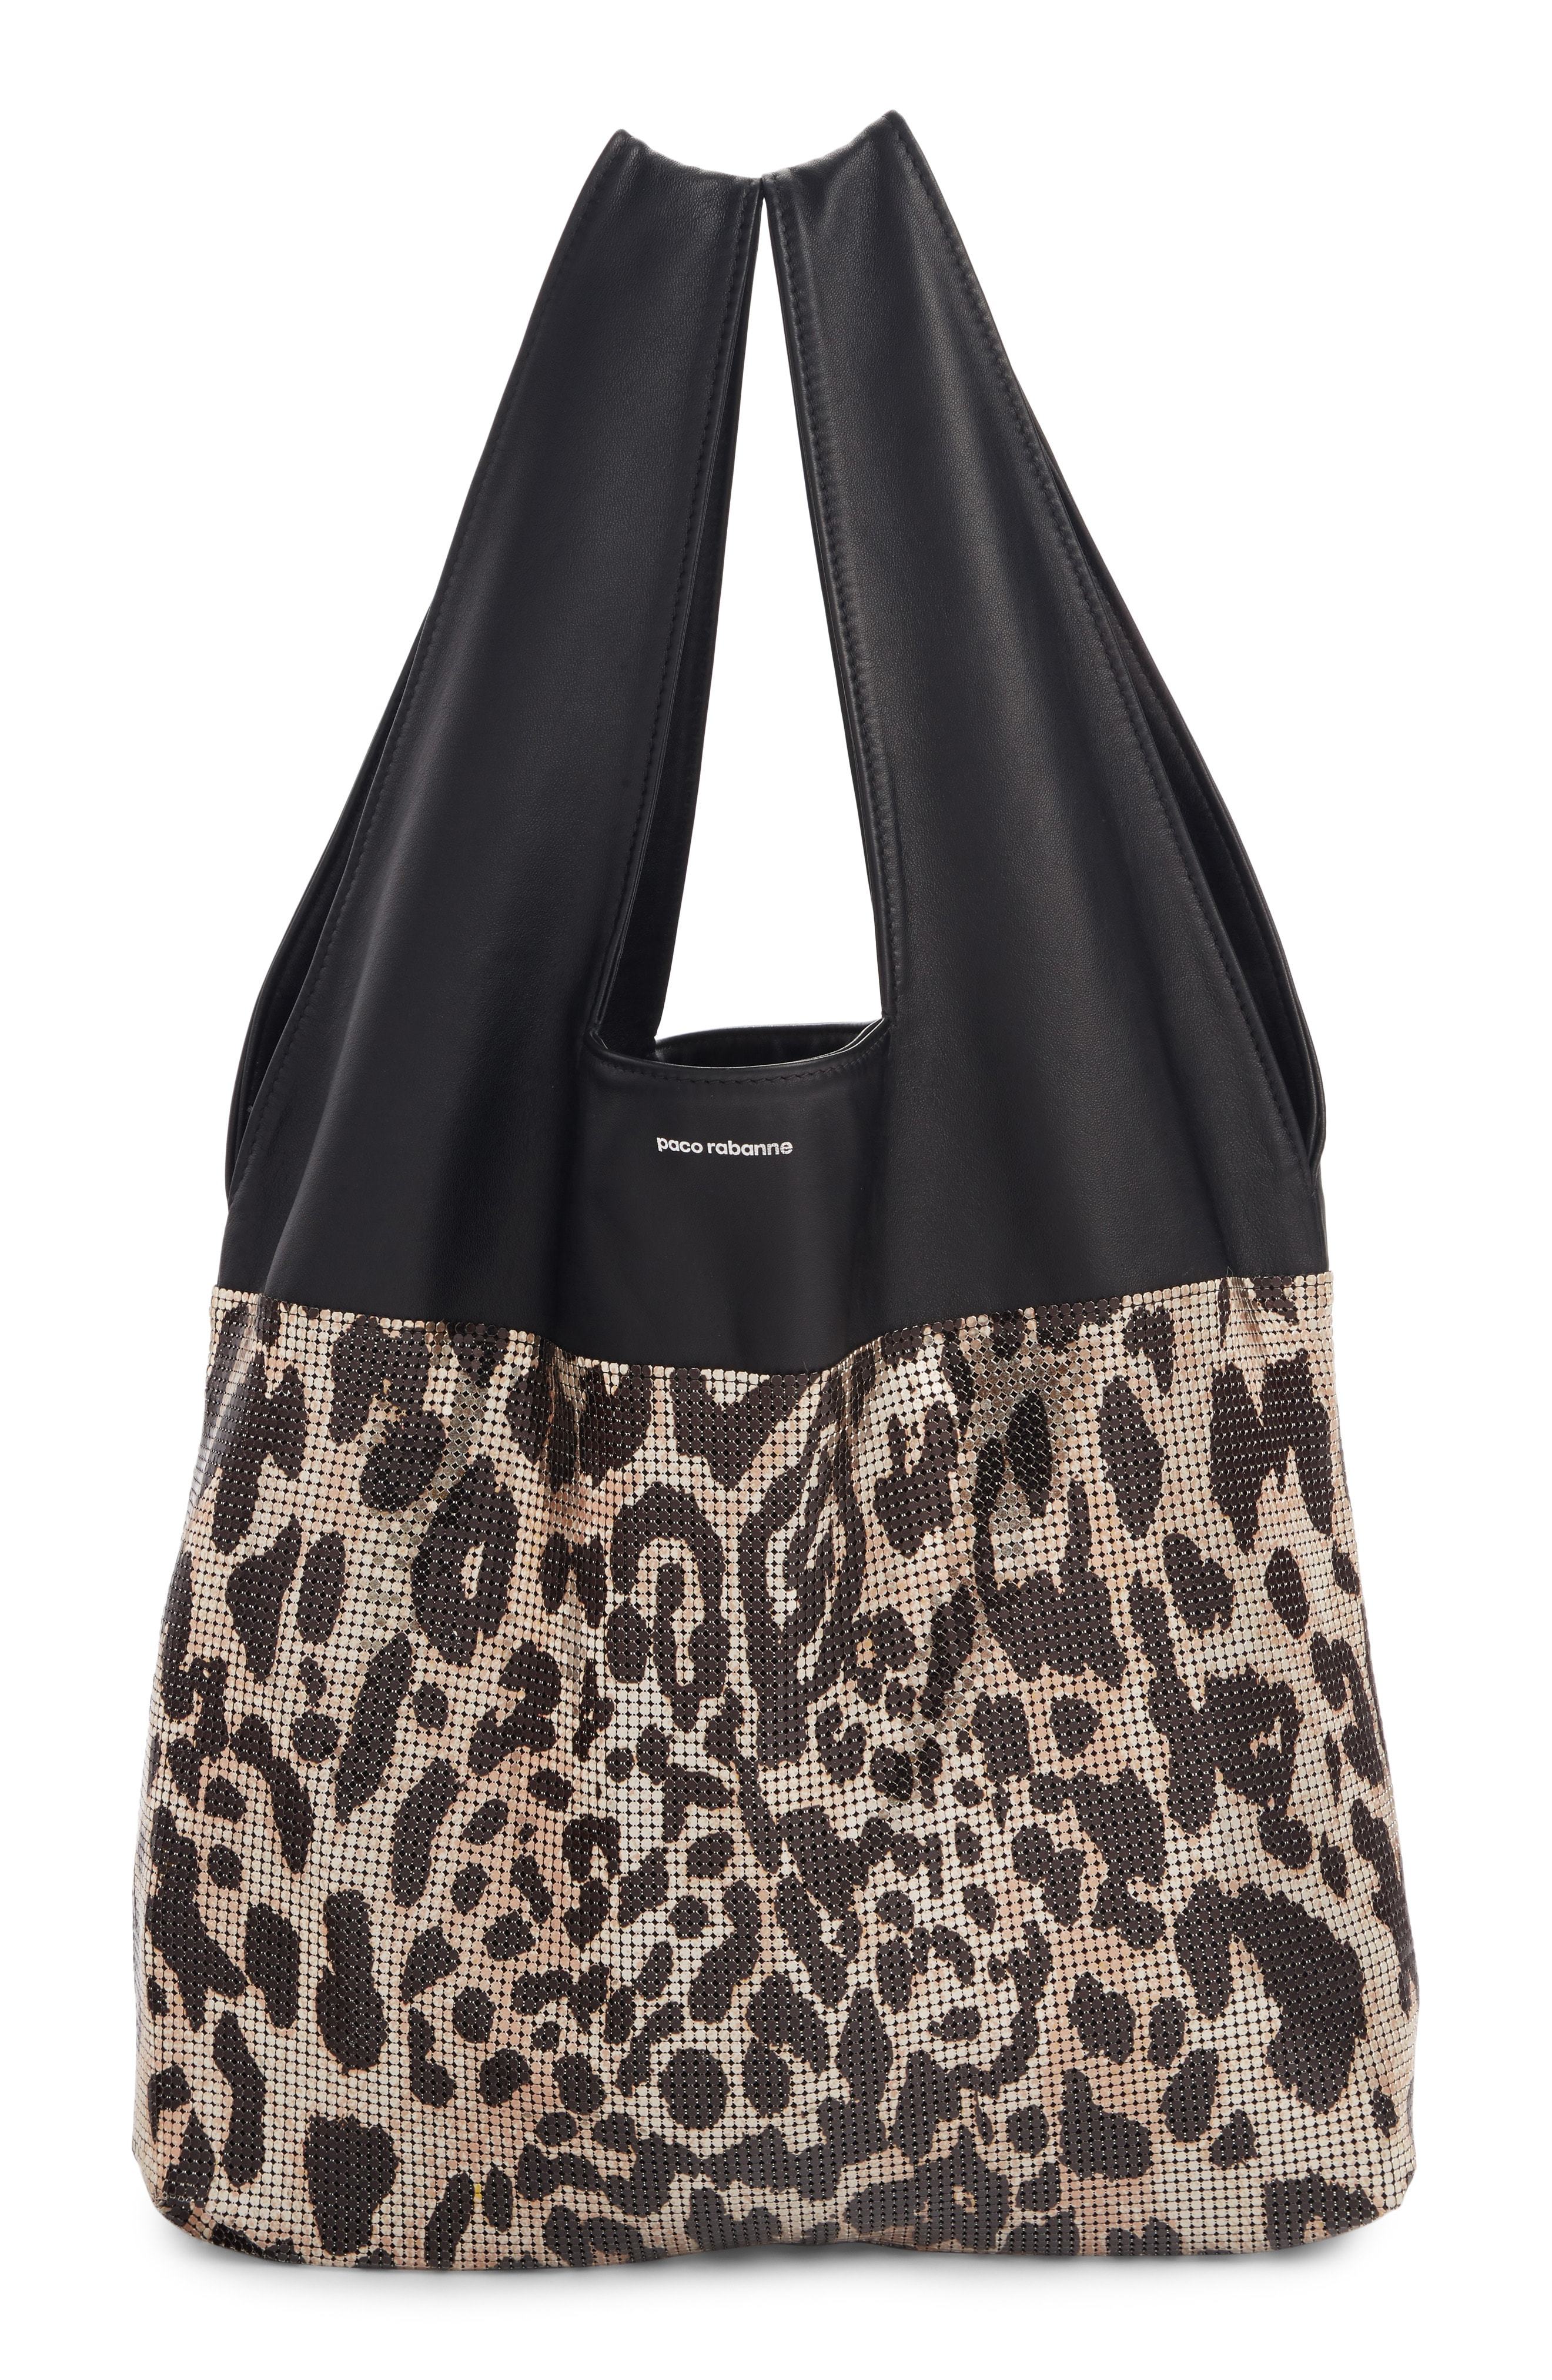 https://cdn.lookastic.com/black-and-tan-leopard-leather-tote-bag/leopard-print-mesh-lambskin-leather-hobo-original-9114695.jpg